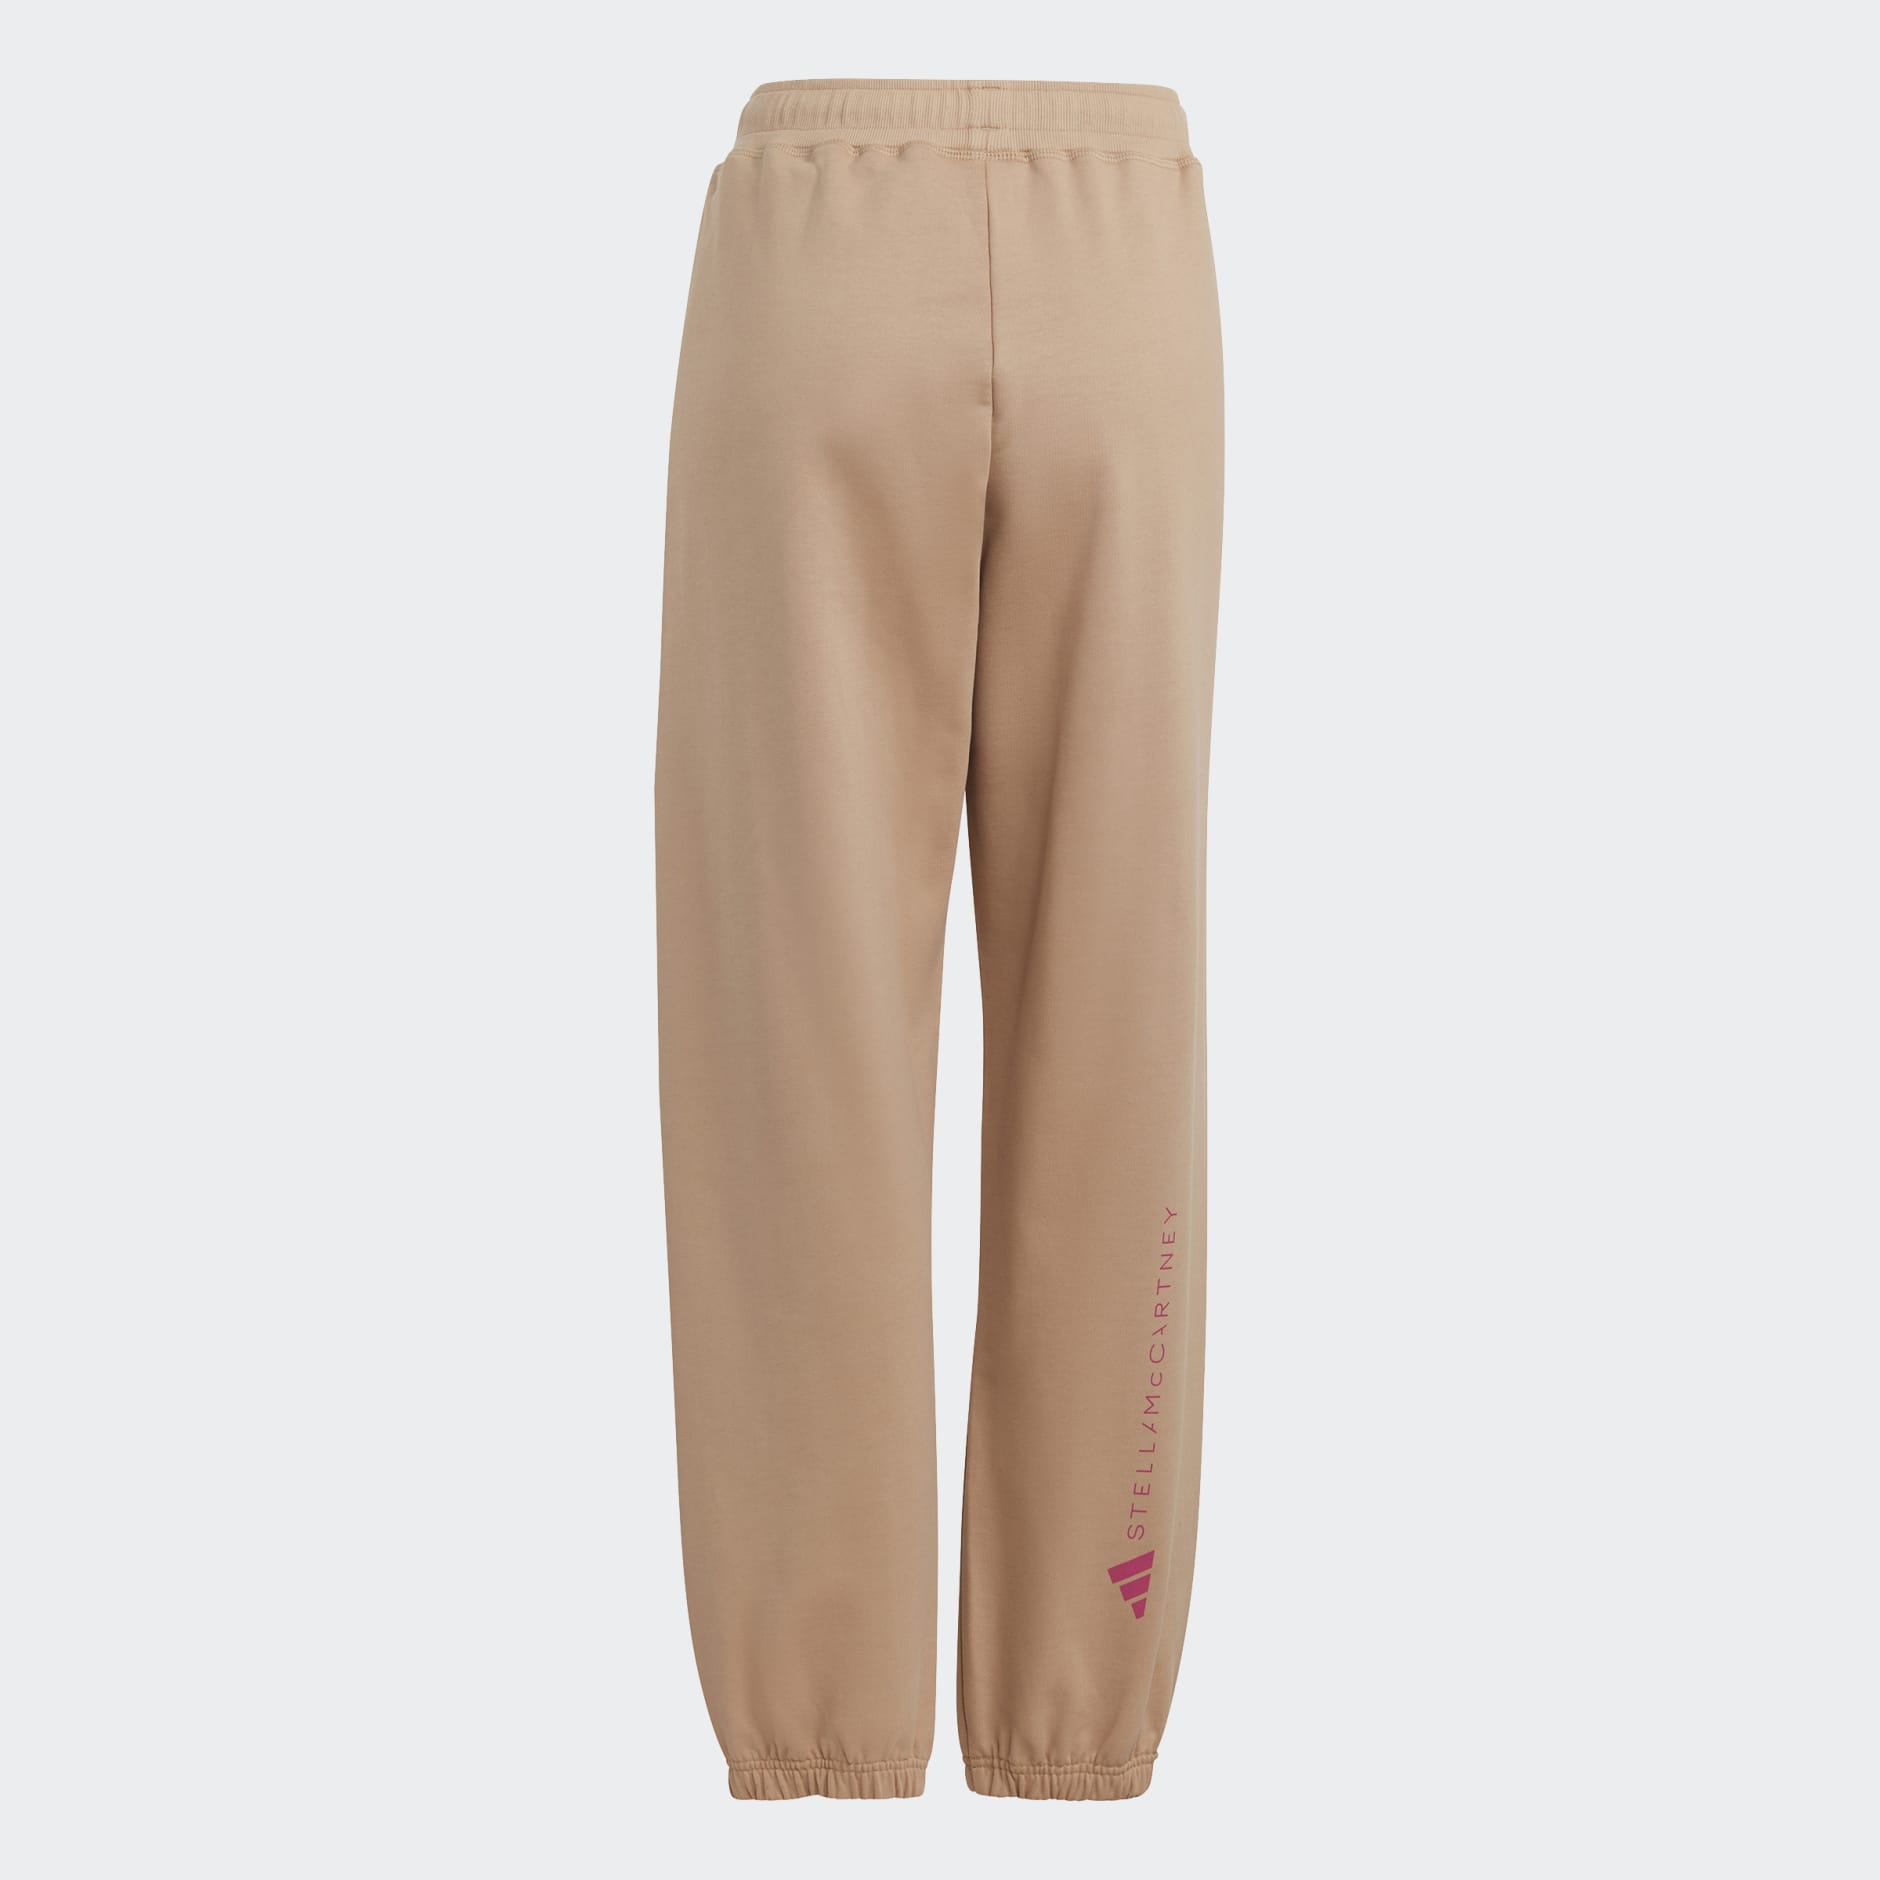 Clothing - adidas by Stella McCartney Sportswear Sweatpants (Gender Neutral)  - Brown